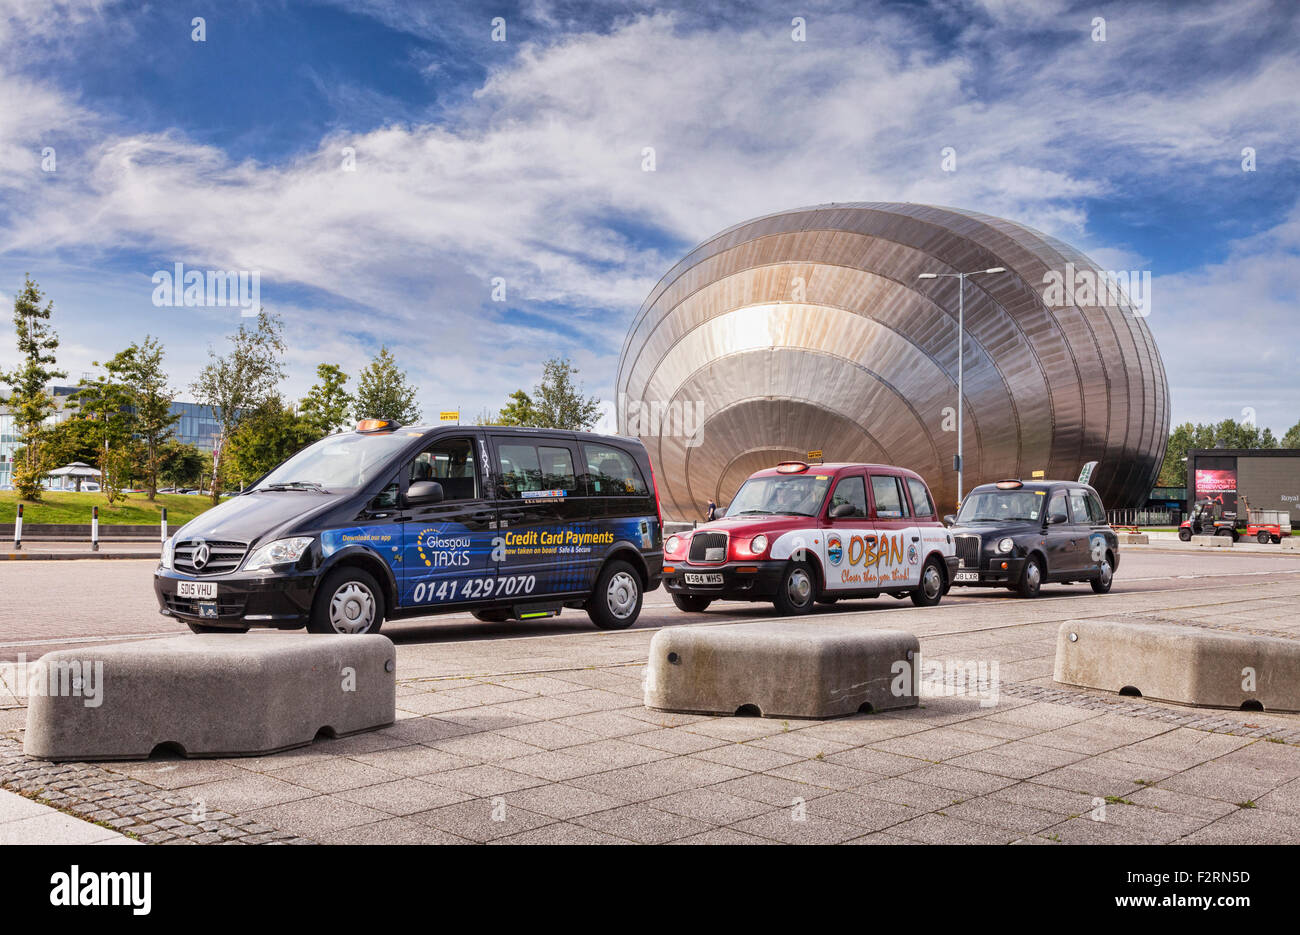 Taxi cabs at the Imax Cinema, Glasgow, Scotland. Stock Photo